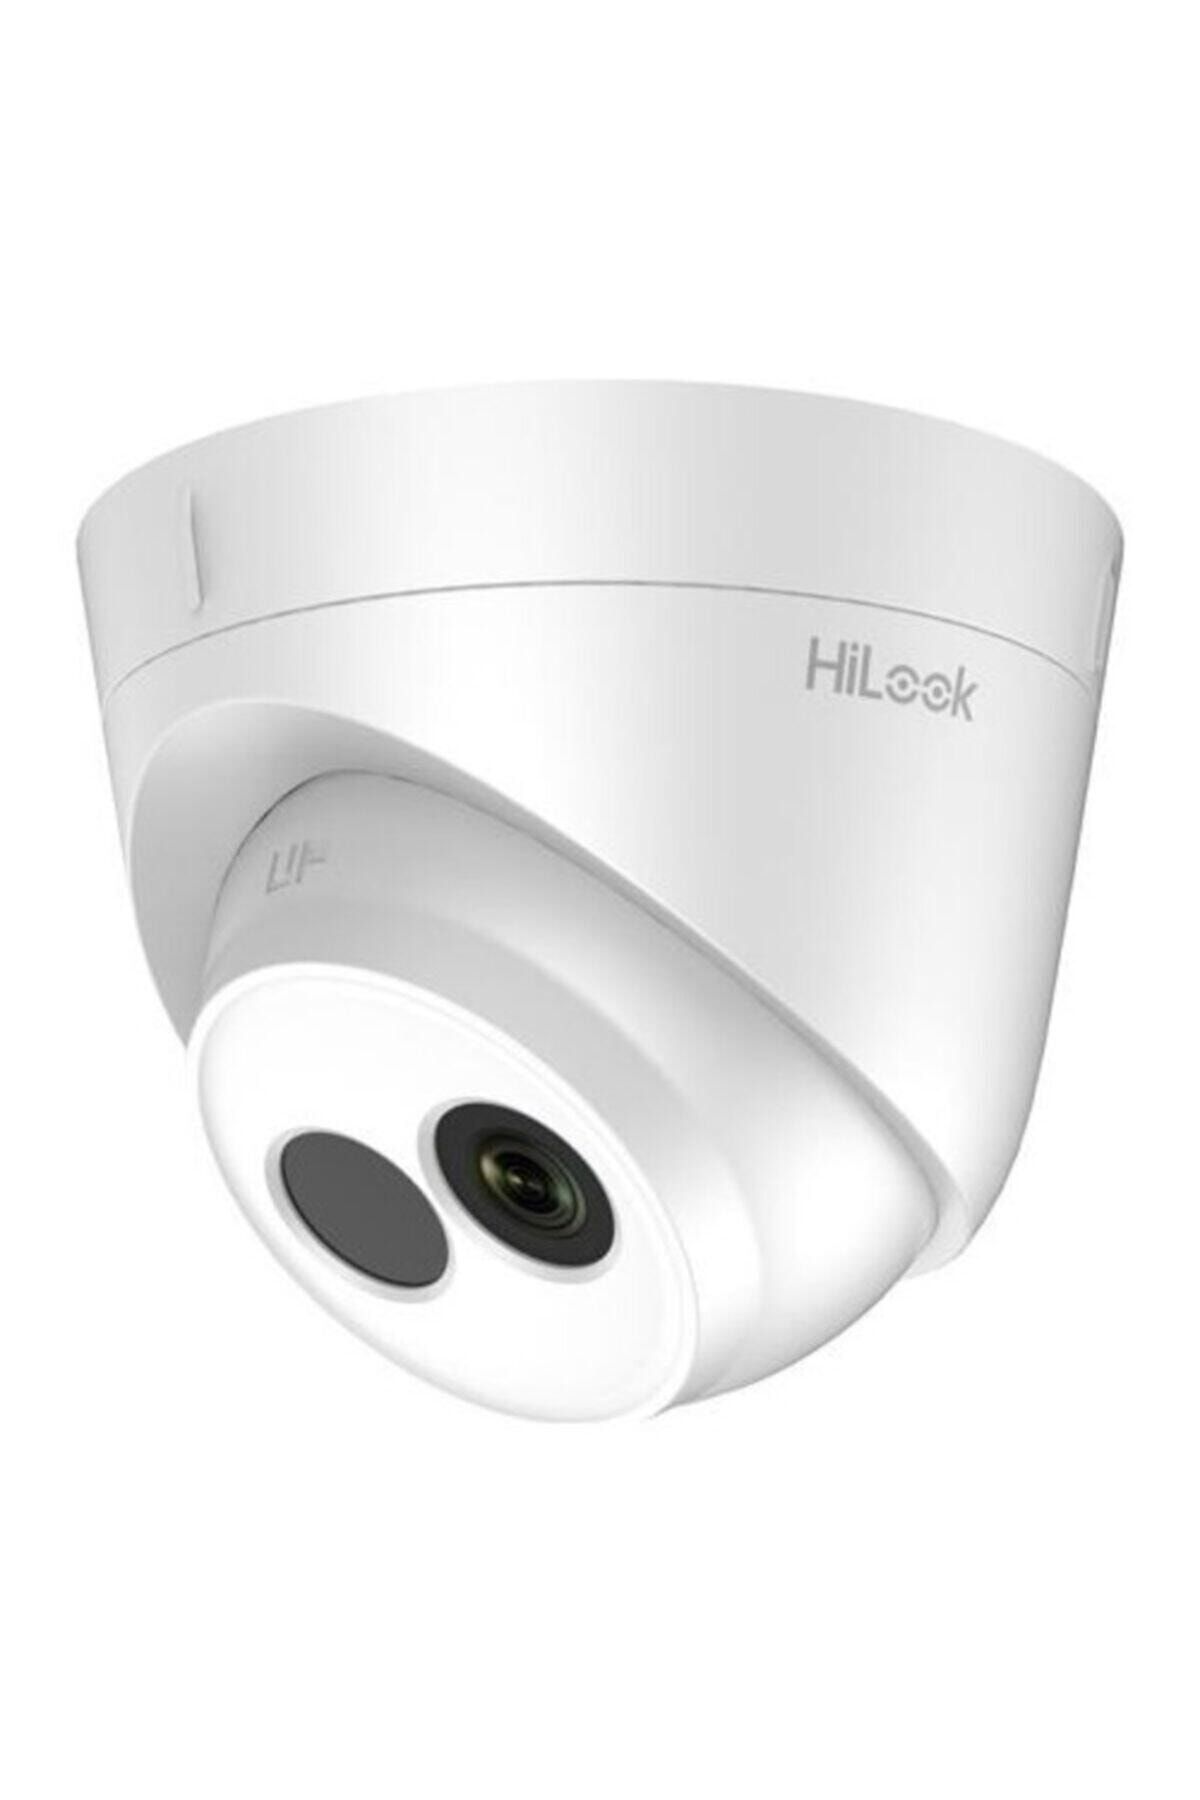 Hilook Ipc-t100 1 Mp 2.8 Mm Sabit Lensli Ir Dome Ip Kamera